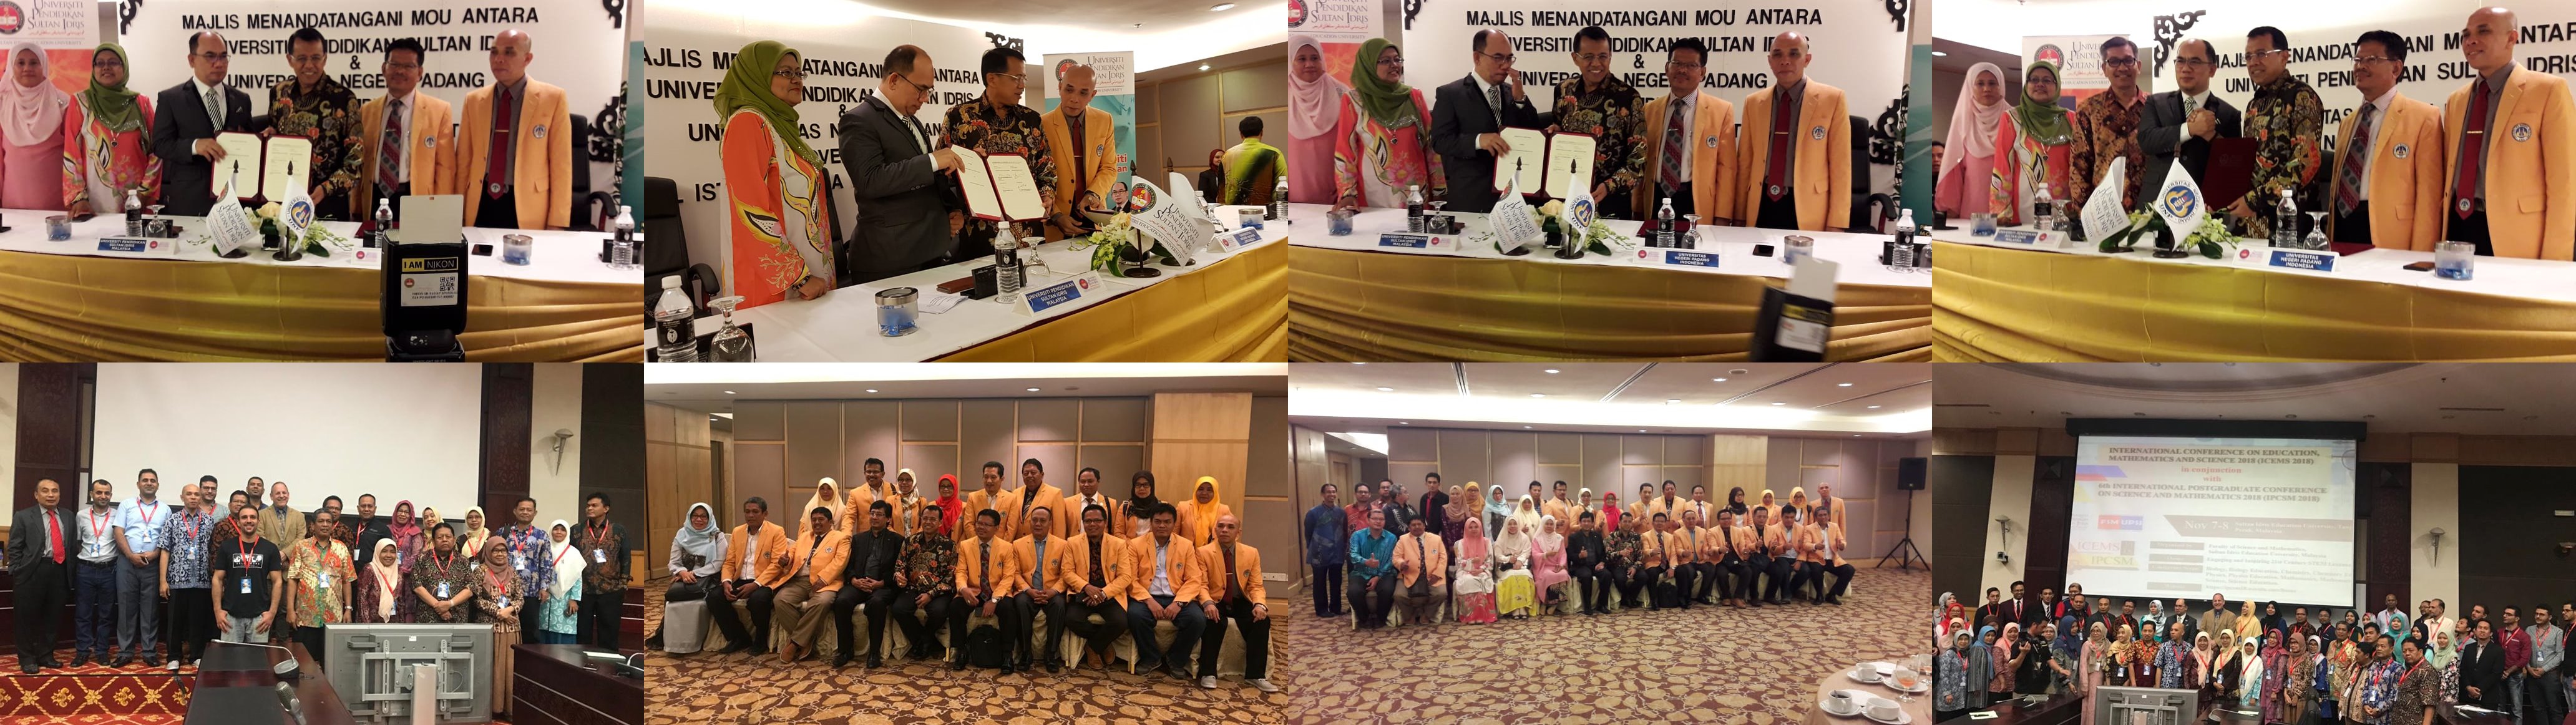 Foto kegiatan MoU antara UNP dan UPSI Malaysia